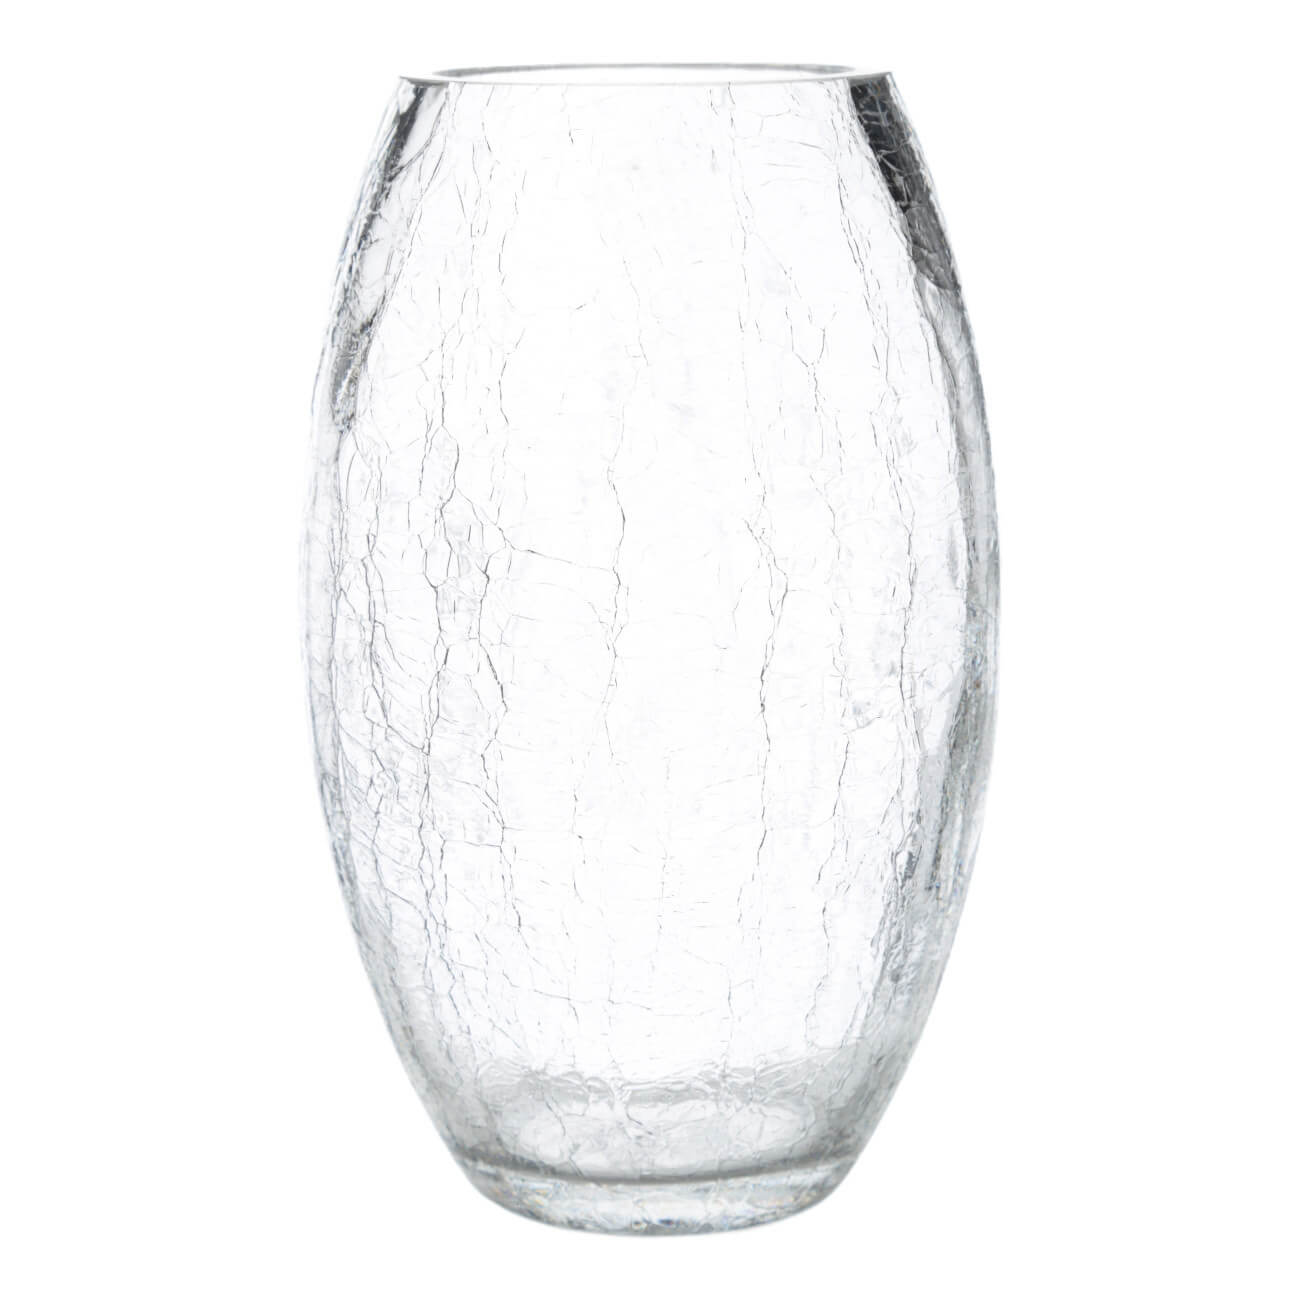 Ваза для цветов, 24 см, стекло, Кракелюр, Ice ваза для цветов 30 см стекло clear dented